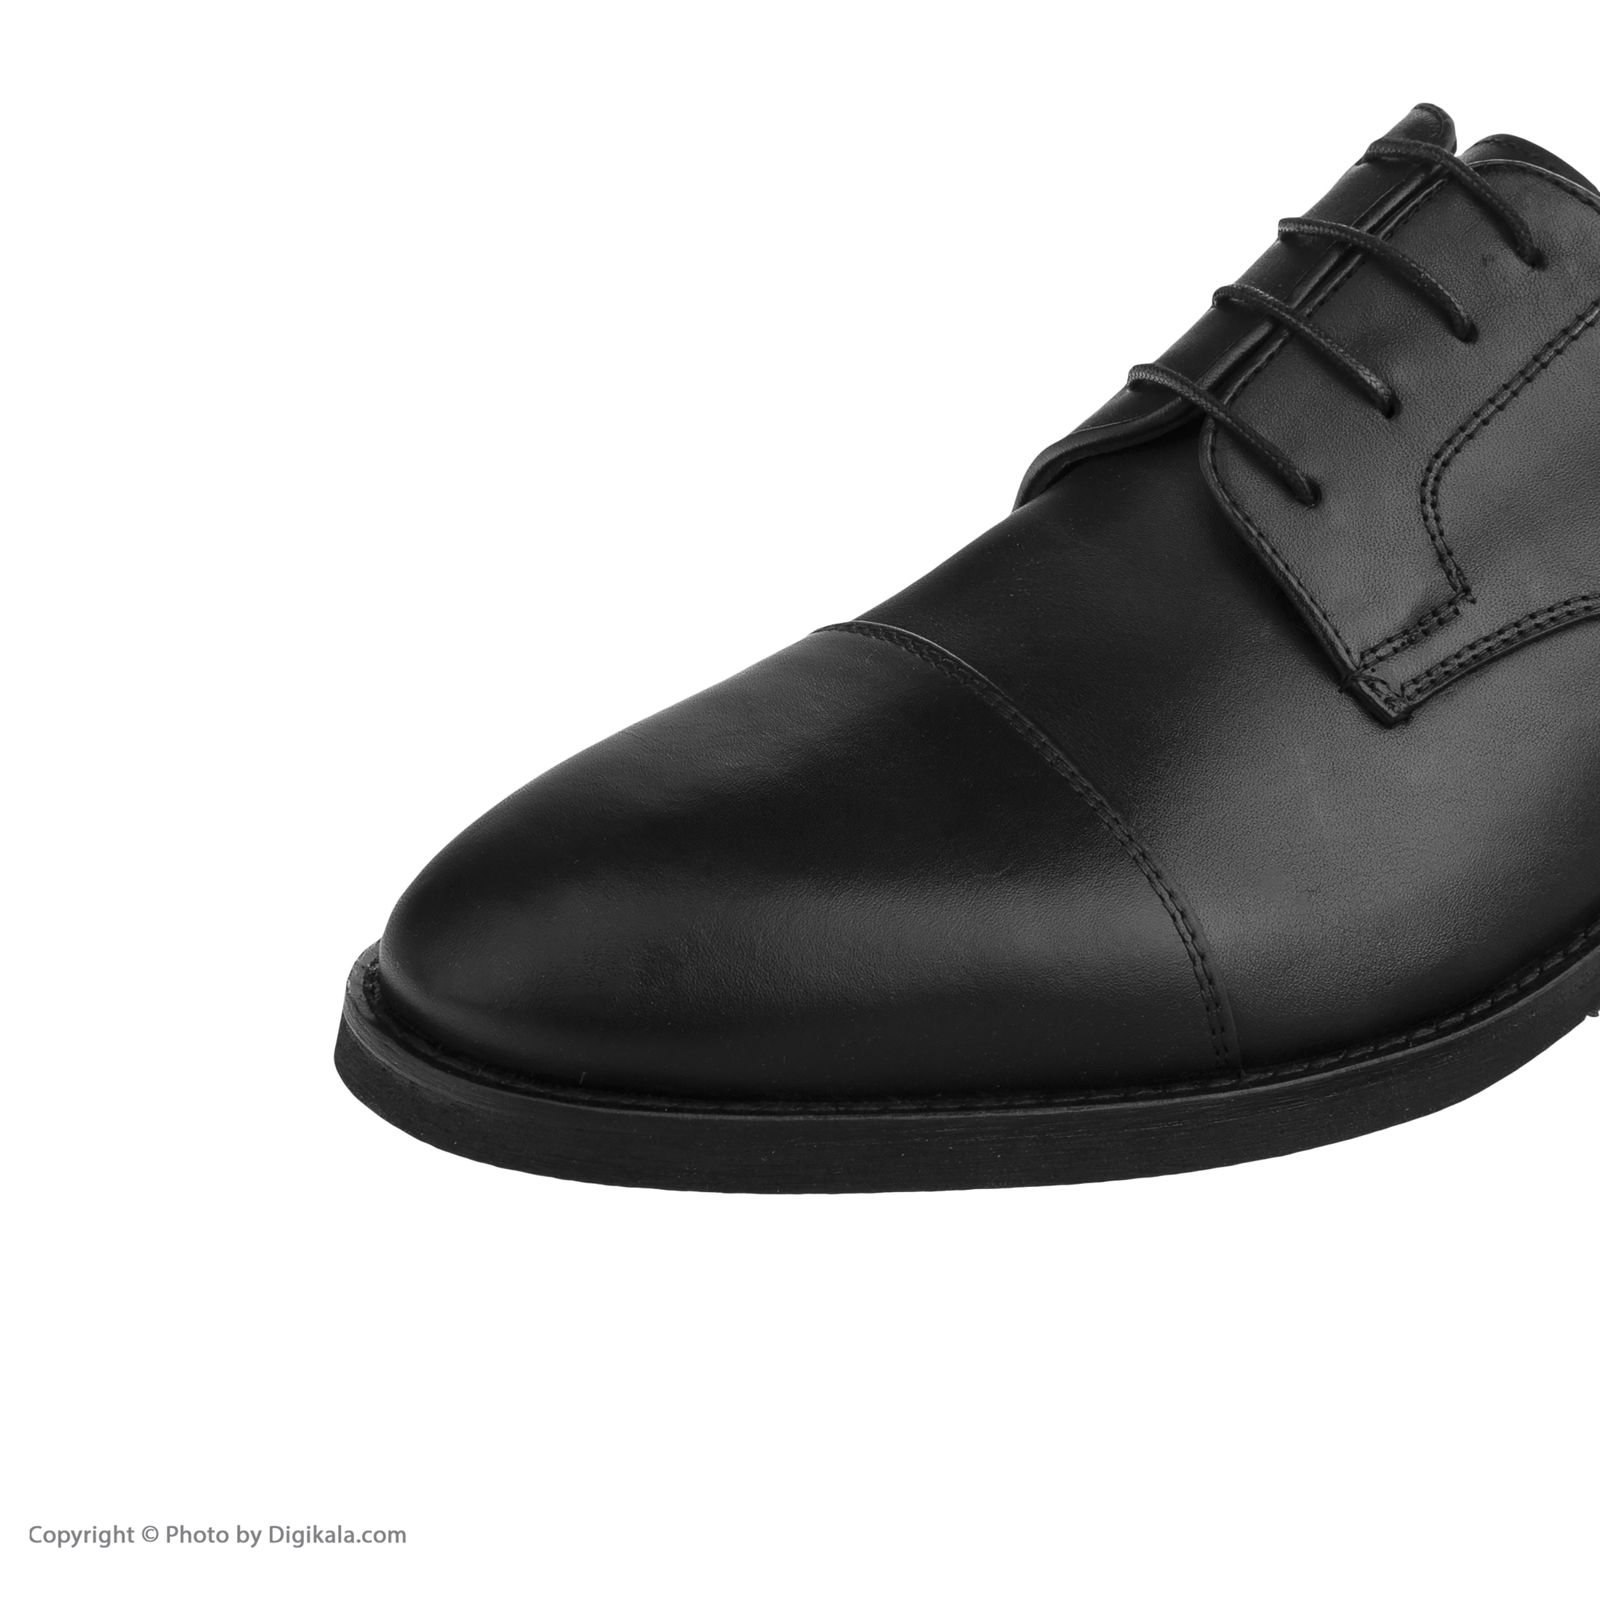  کفش مردانه شیفر مدل 7253E503101 -  - 7